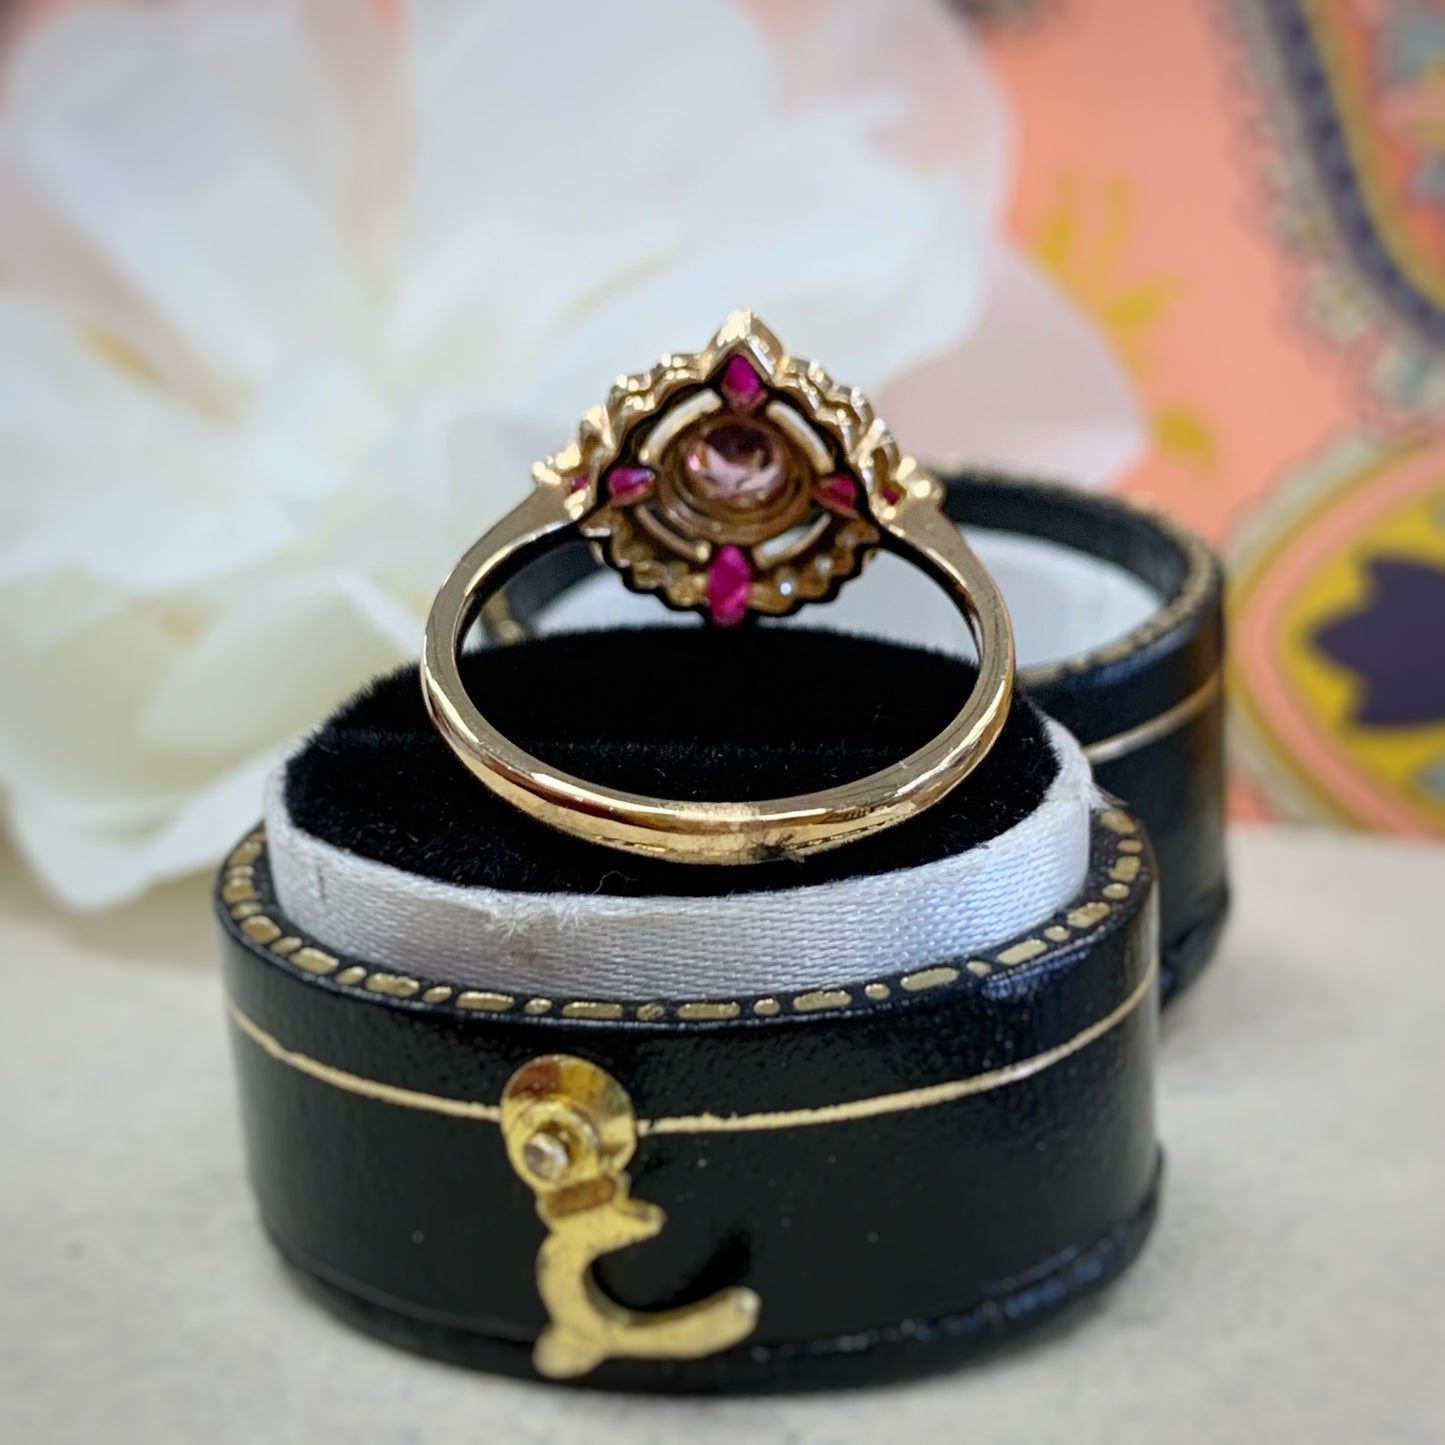 Edwardian Inspired 9ct Yellow Gold Pink Tourmaline Ruby And Diamond Ring - SIZE O